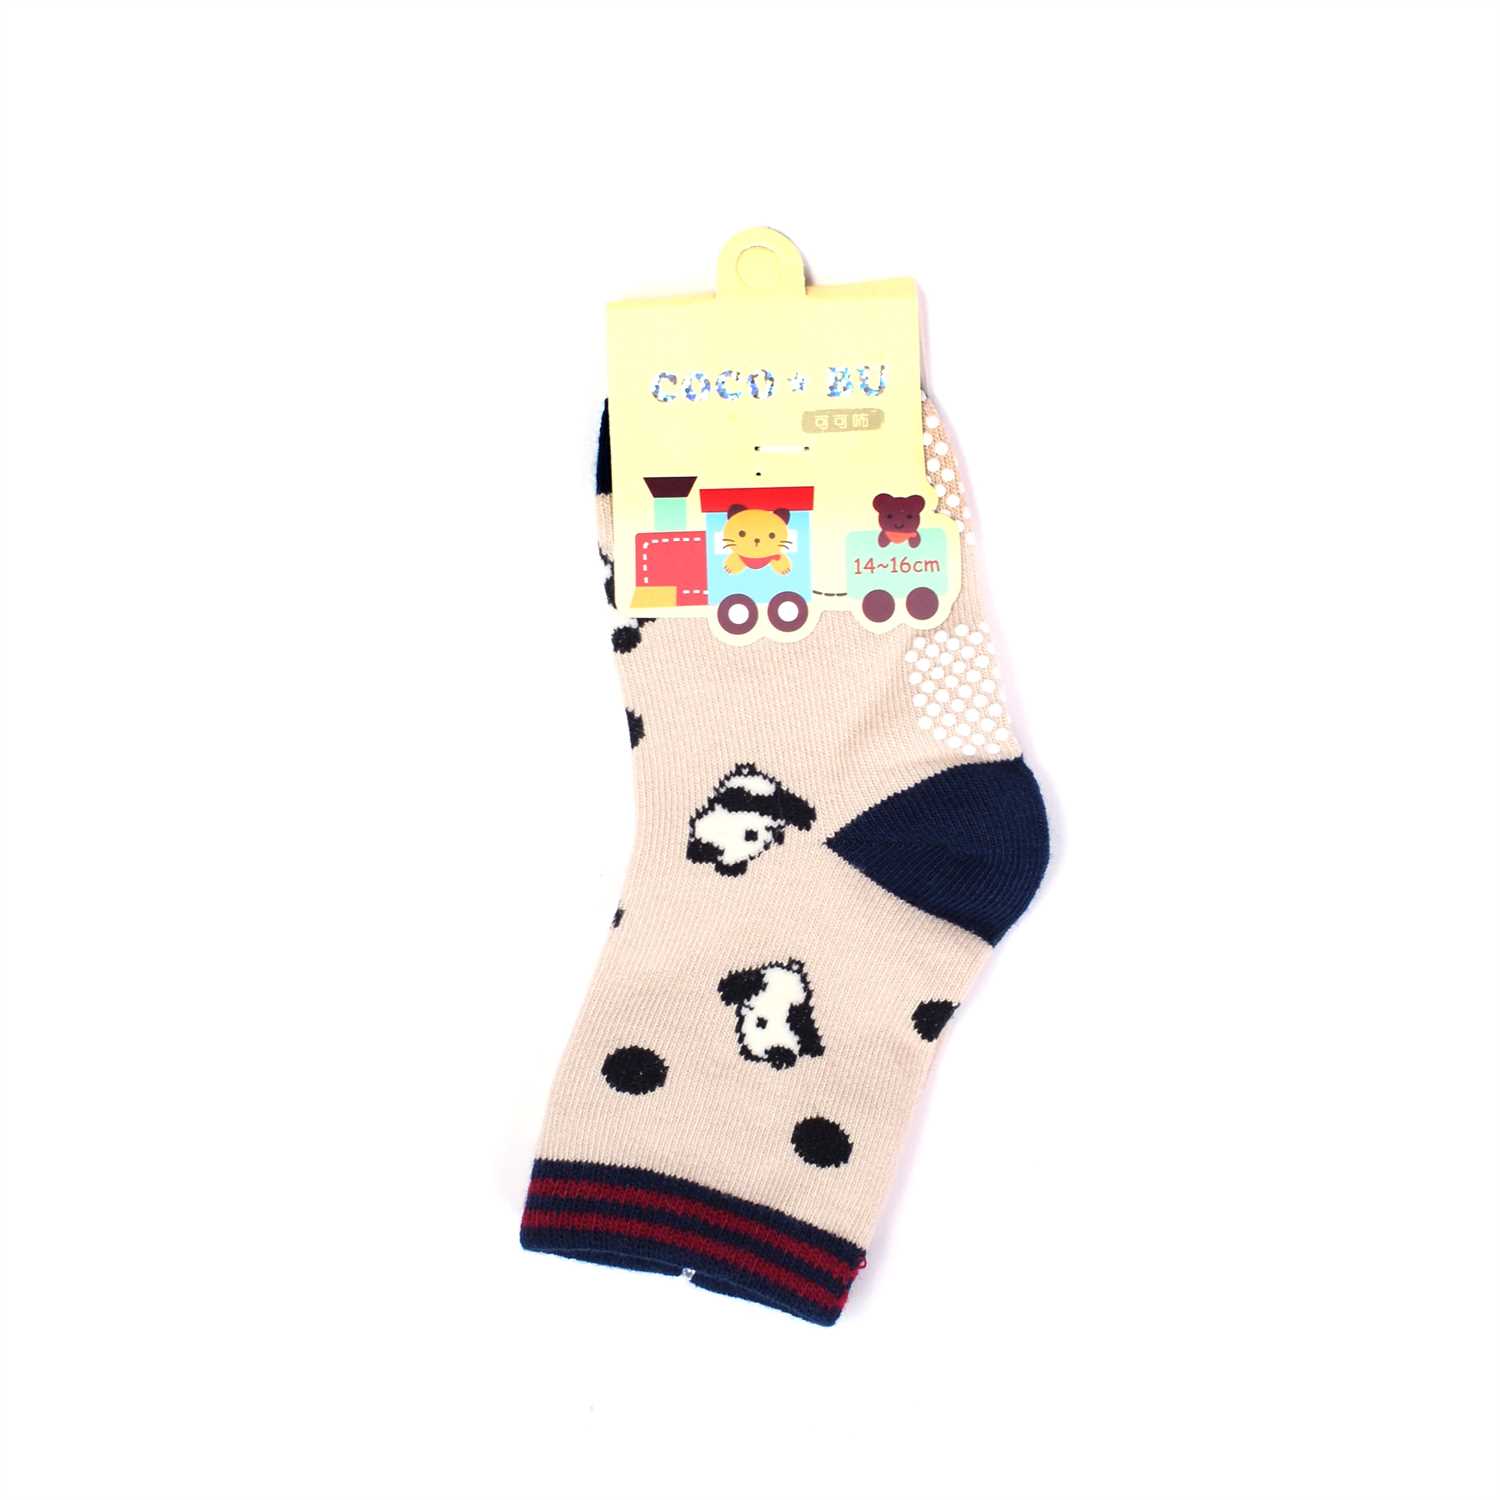 COCO BU Grip Socks With Panda Print (14-16cm) - Light Brown